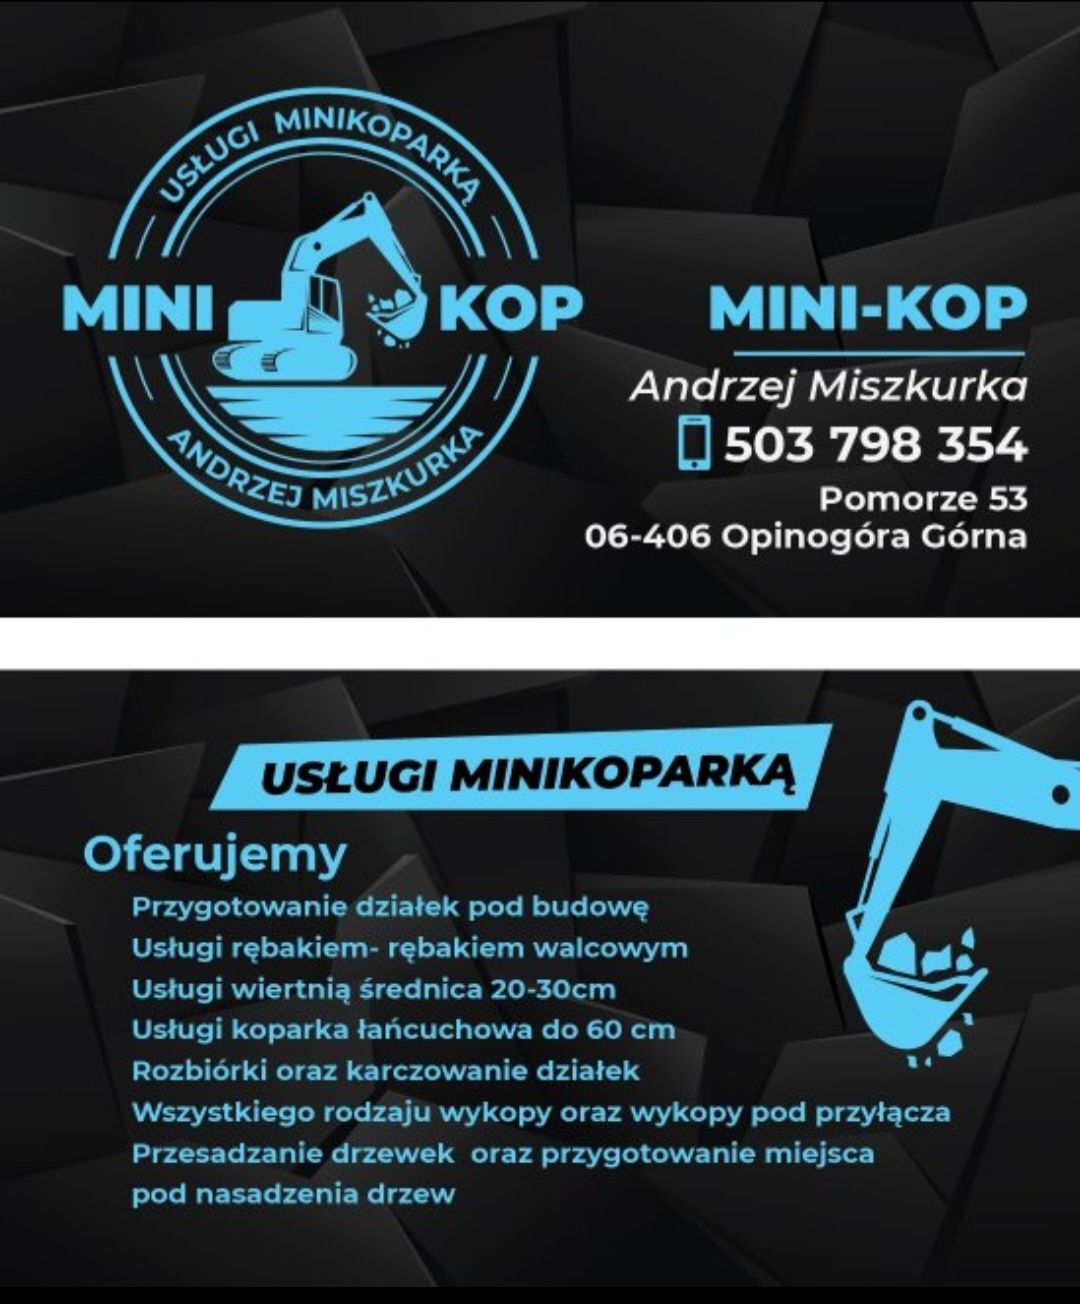 Mini-Kop Usługi minikoparką